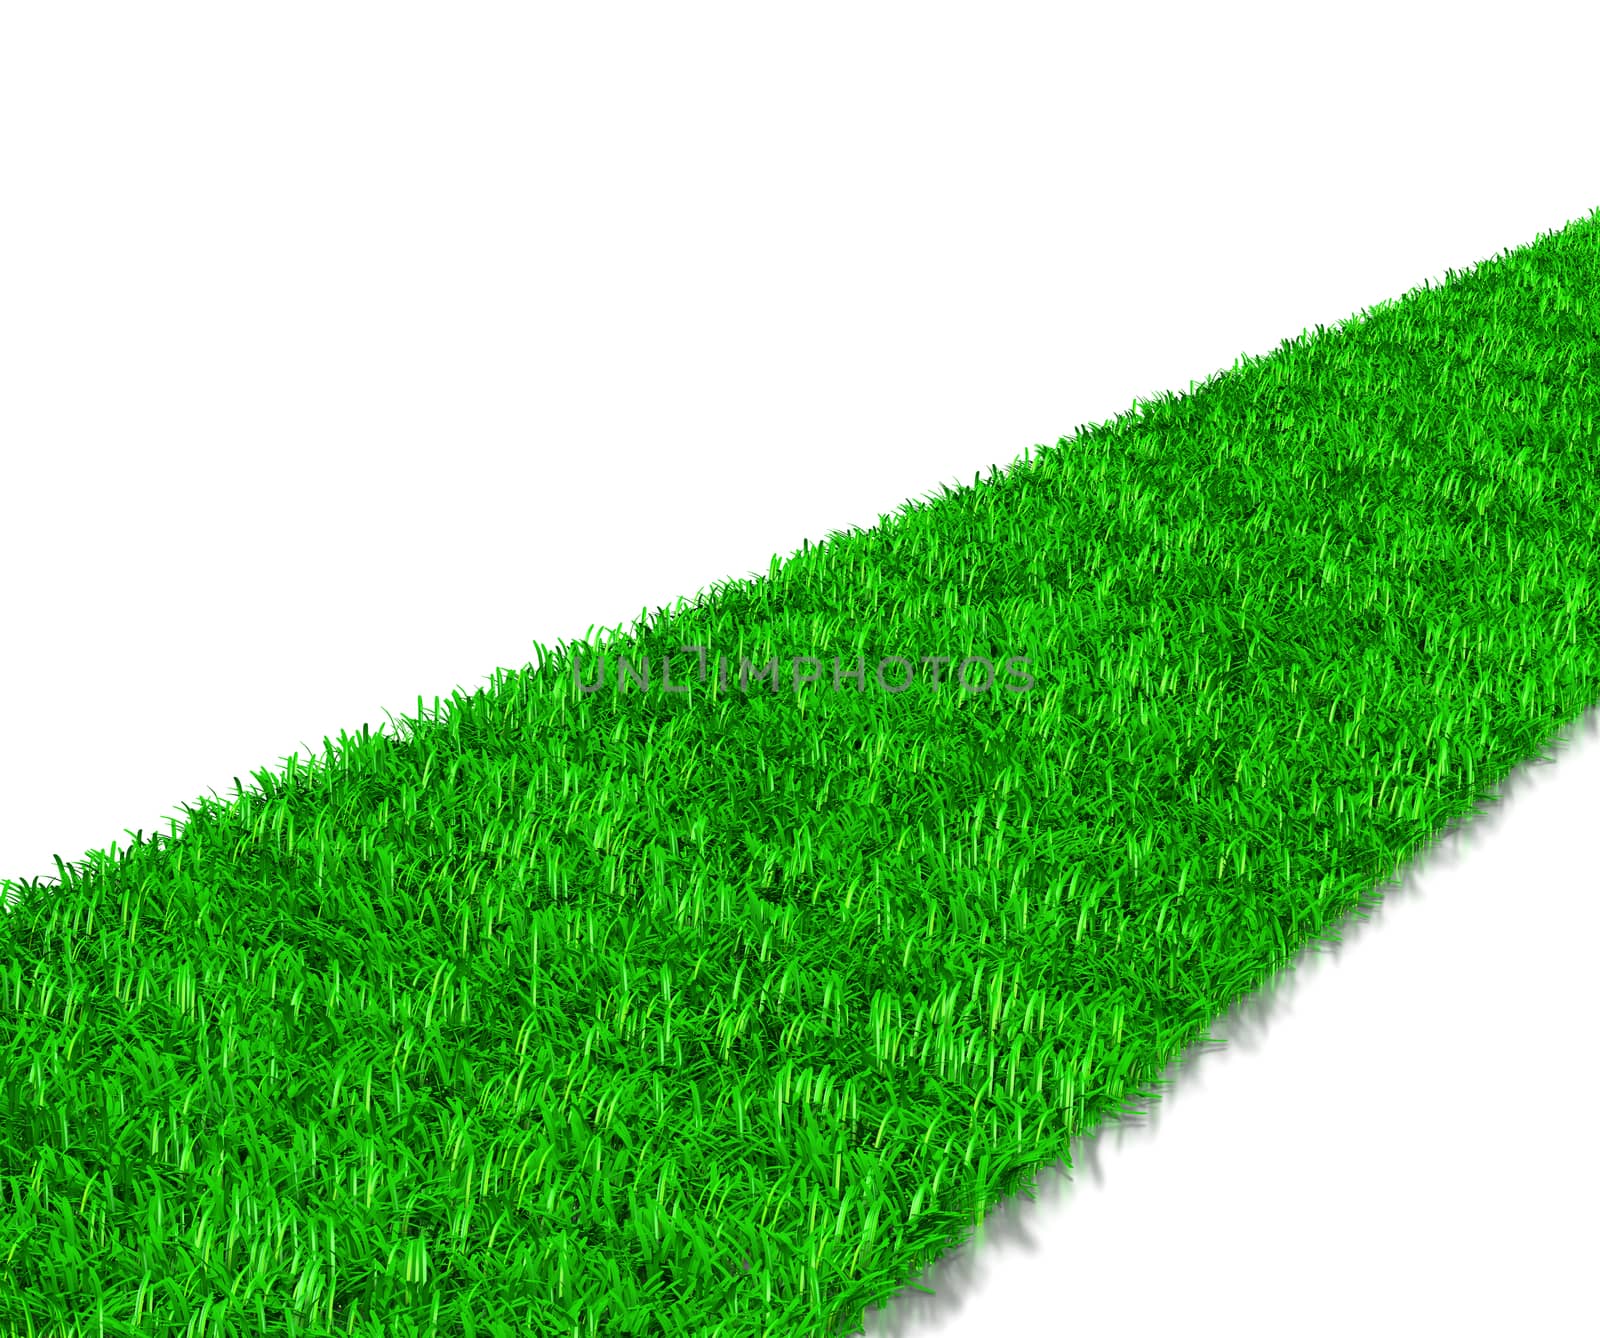 Green Grass Way by make